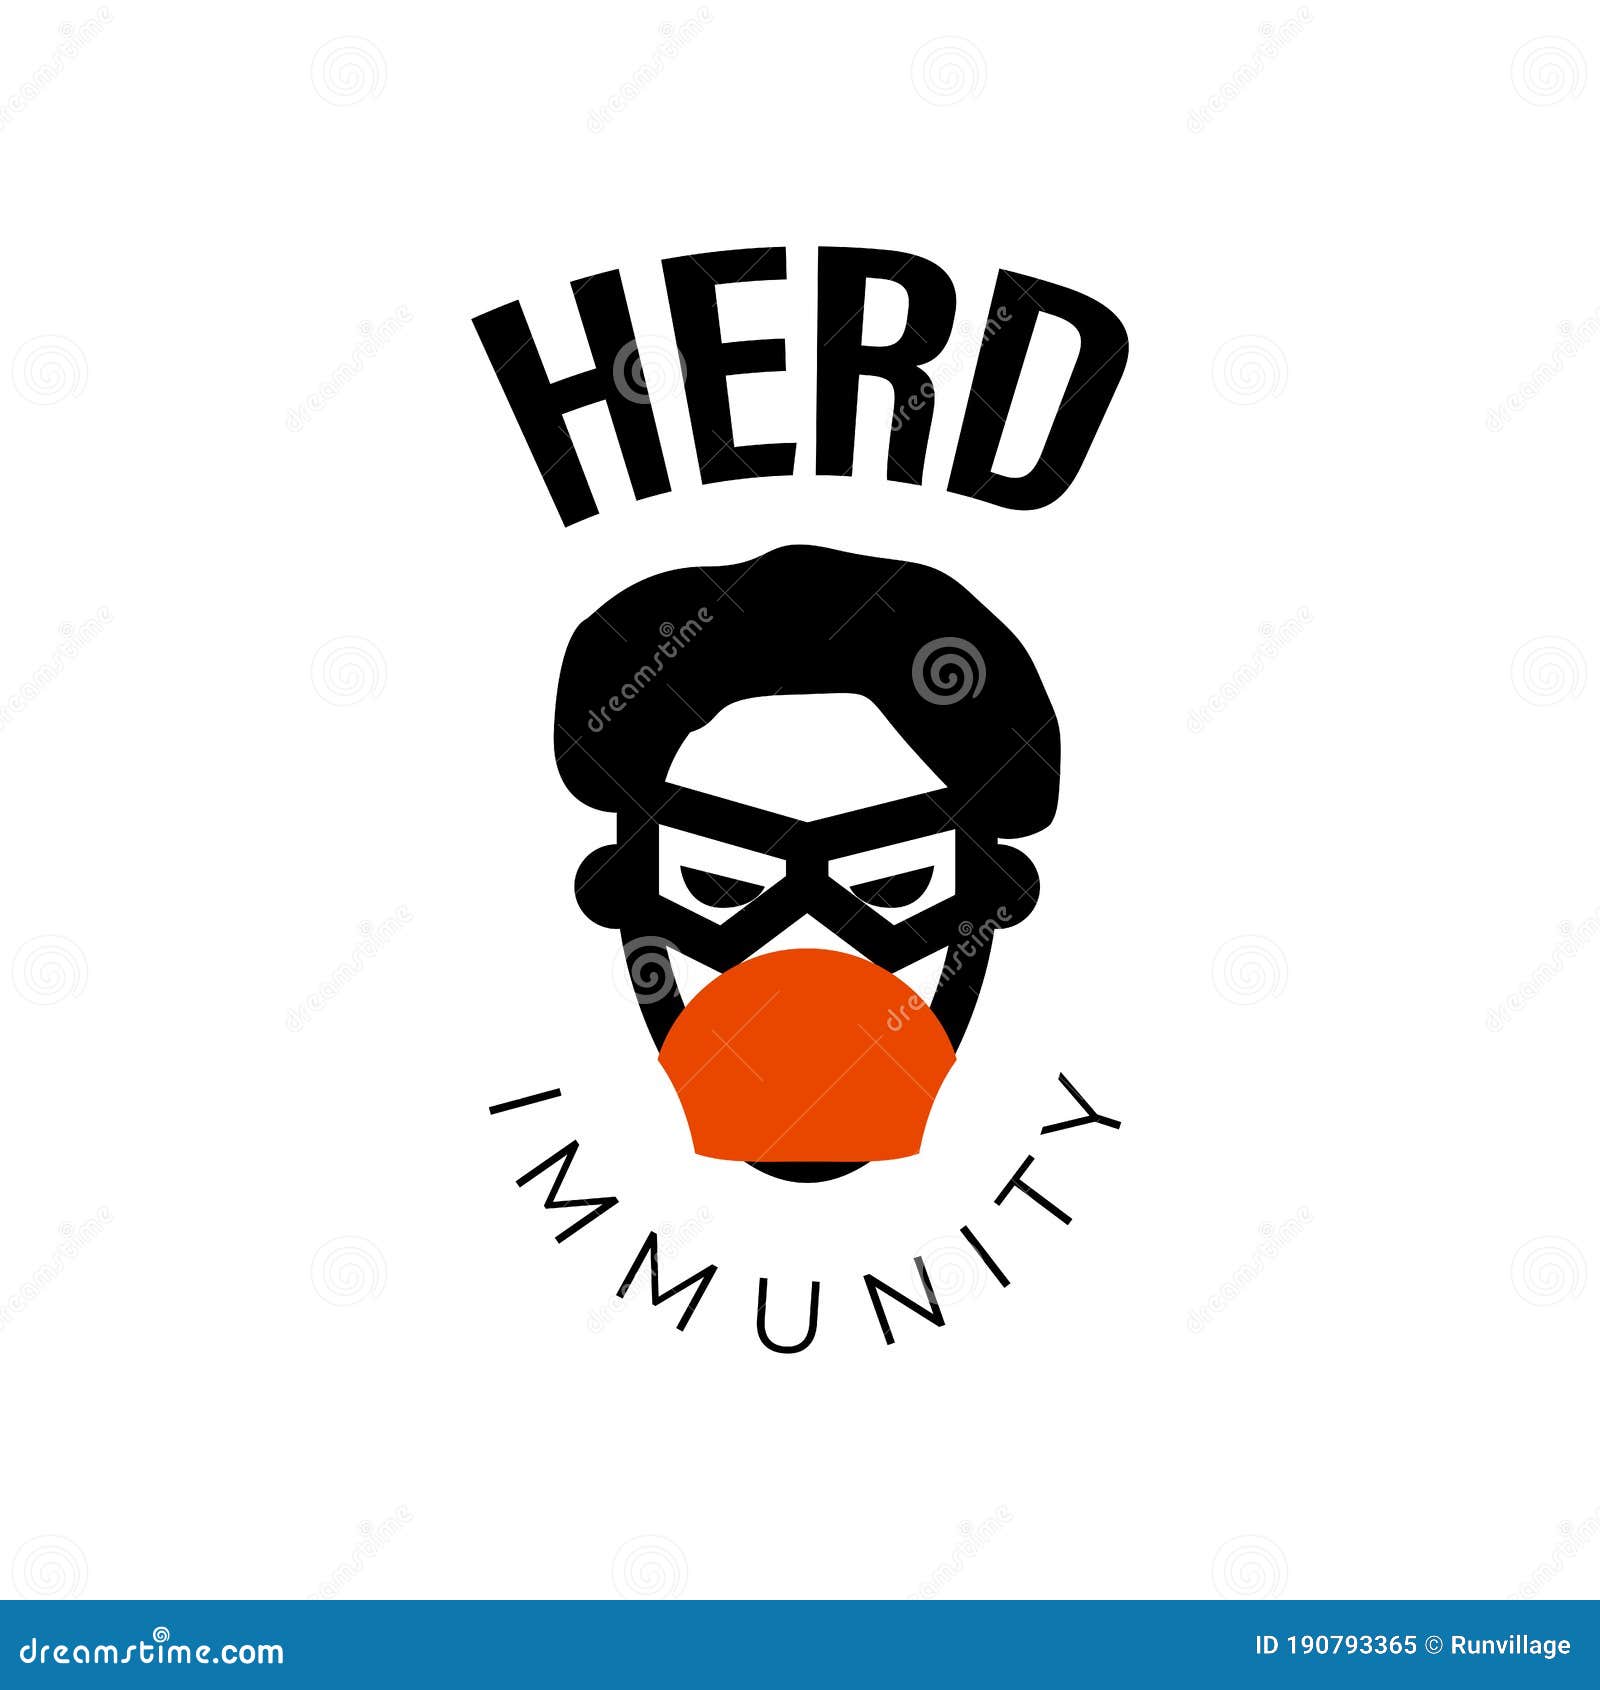 heard immunity logo icon for new normal lifestye concept